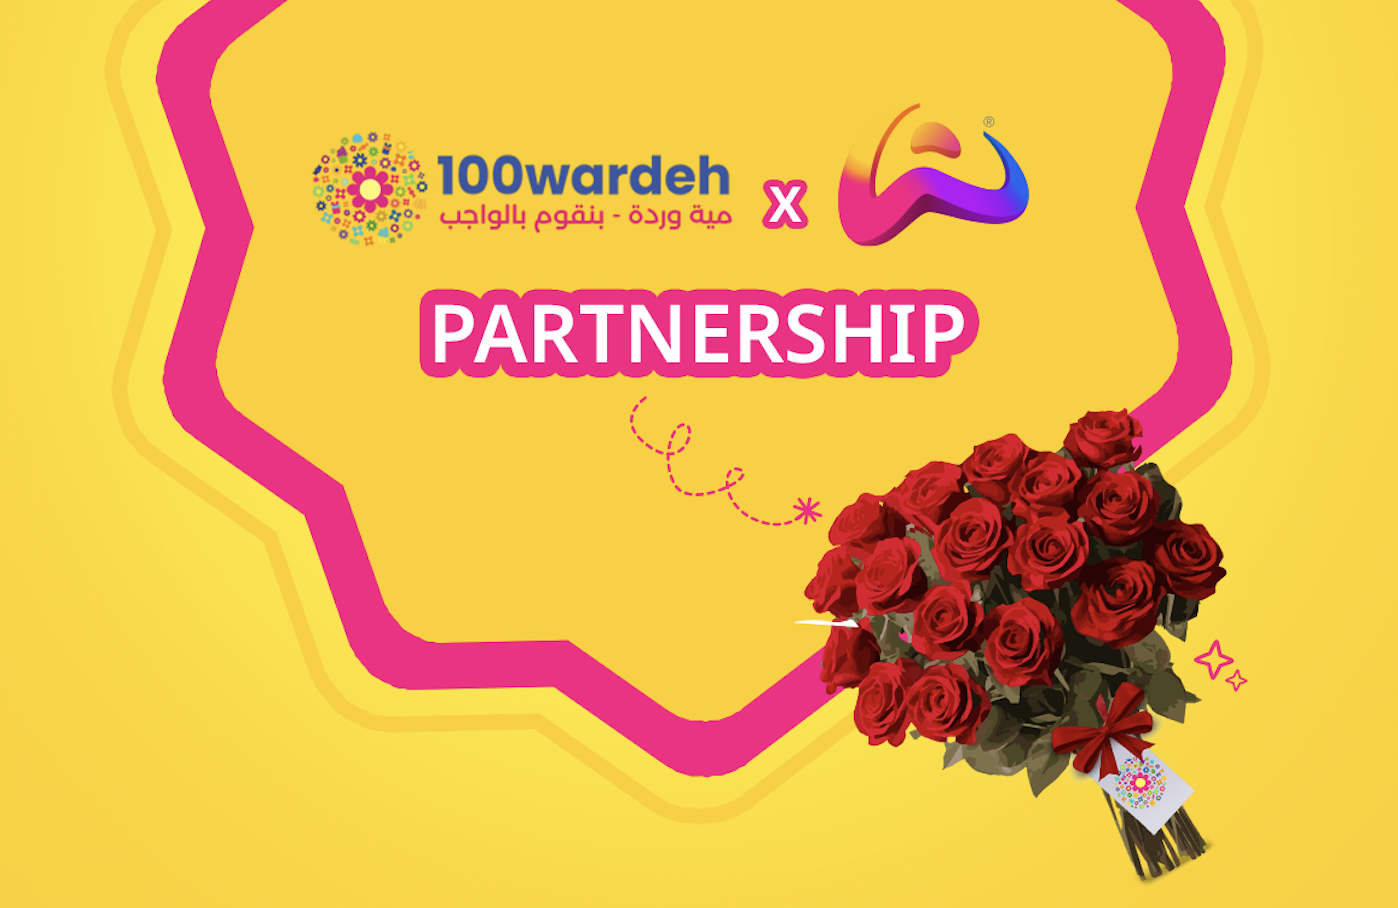 WOLF Qanawat and 100wardeh partnership pushes the boundaries of technology